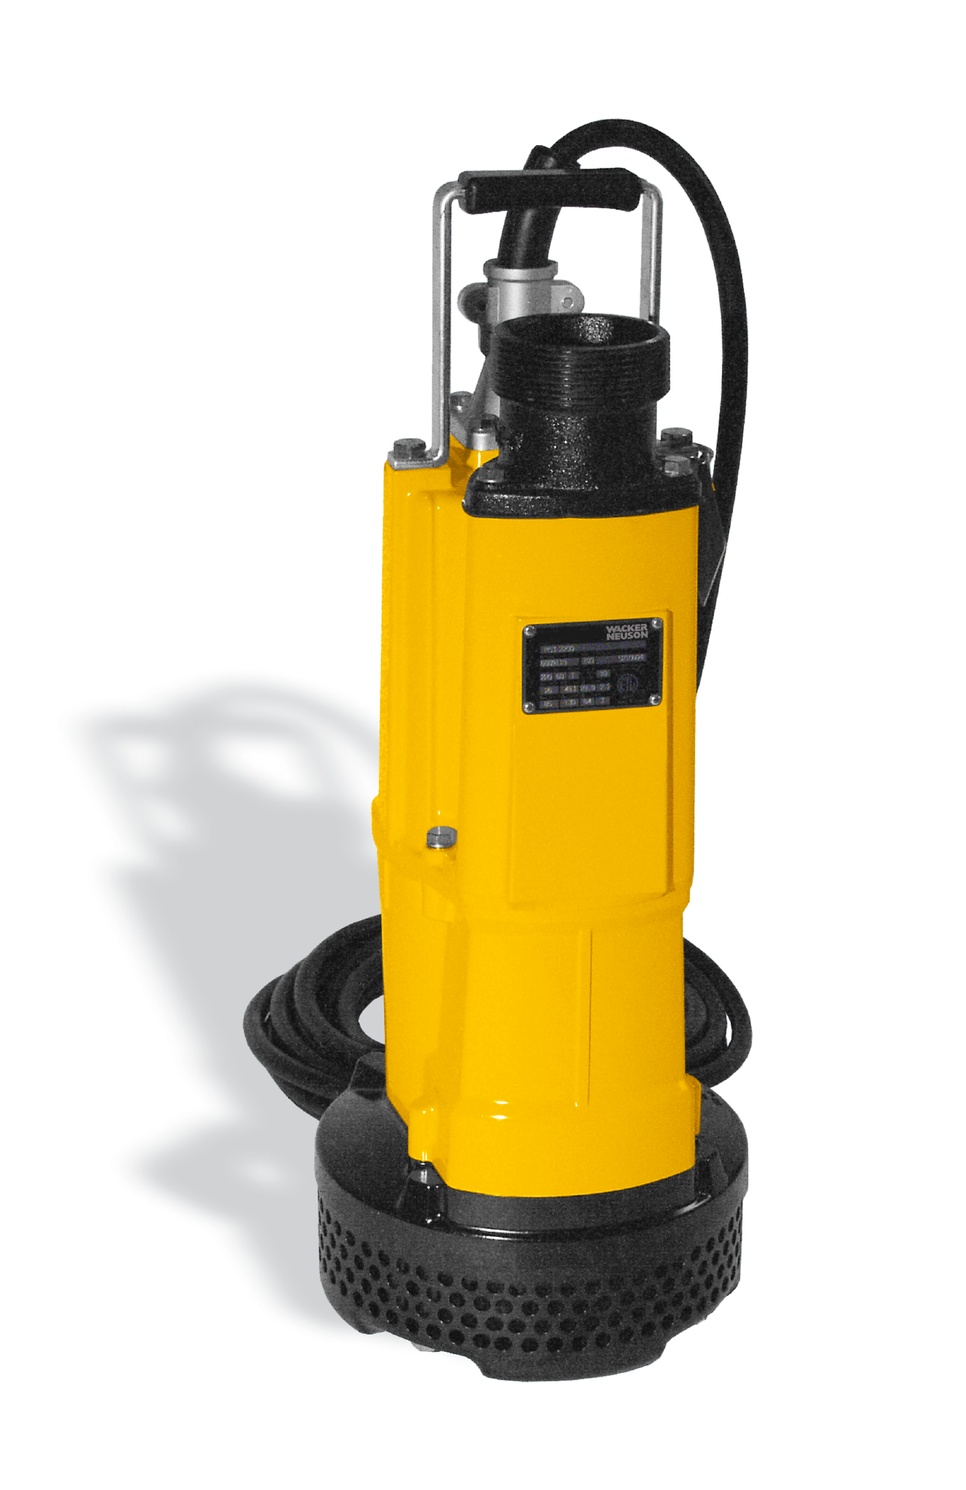  Wacker Neuson Submersible pumps PS3 2200